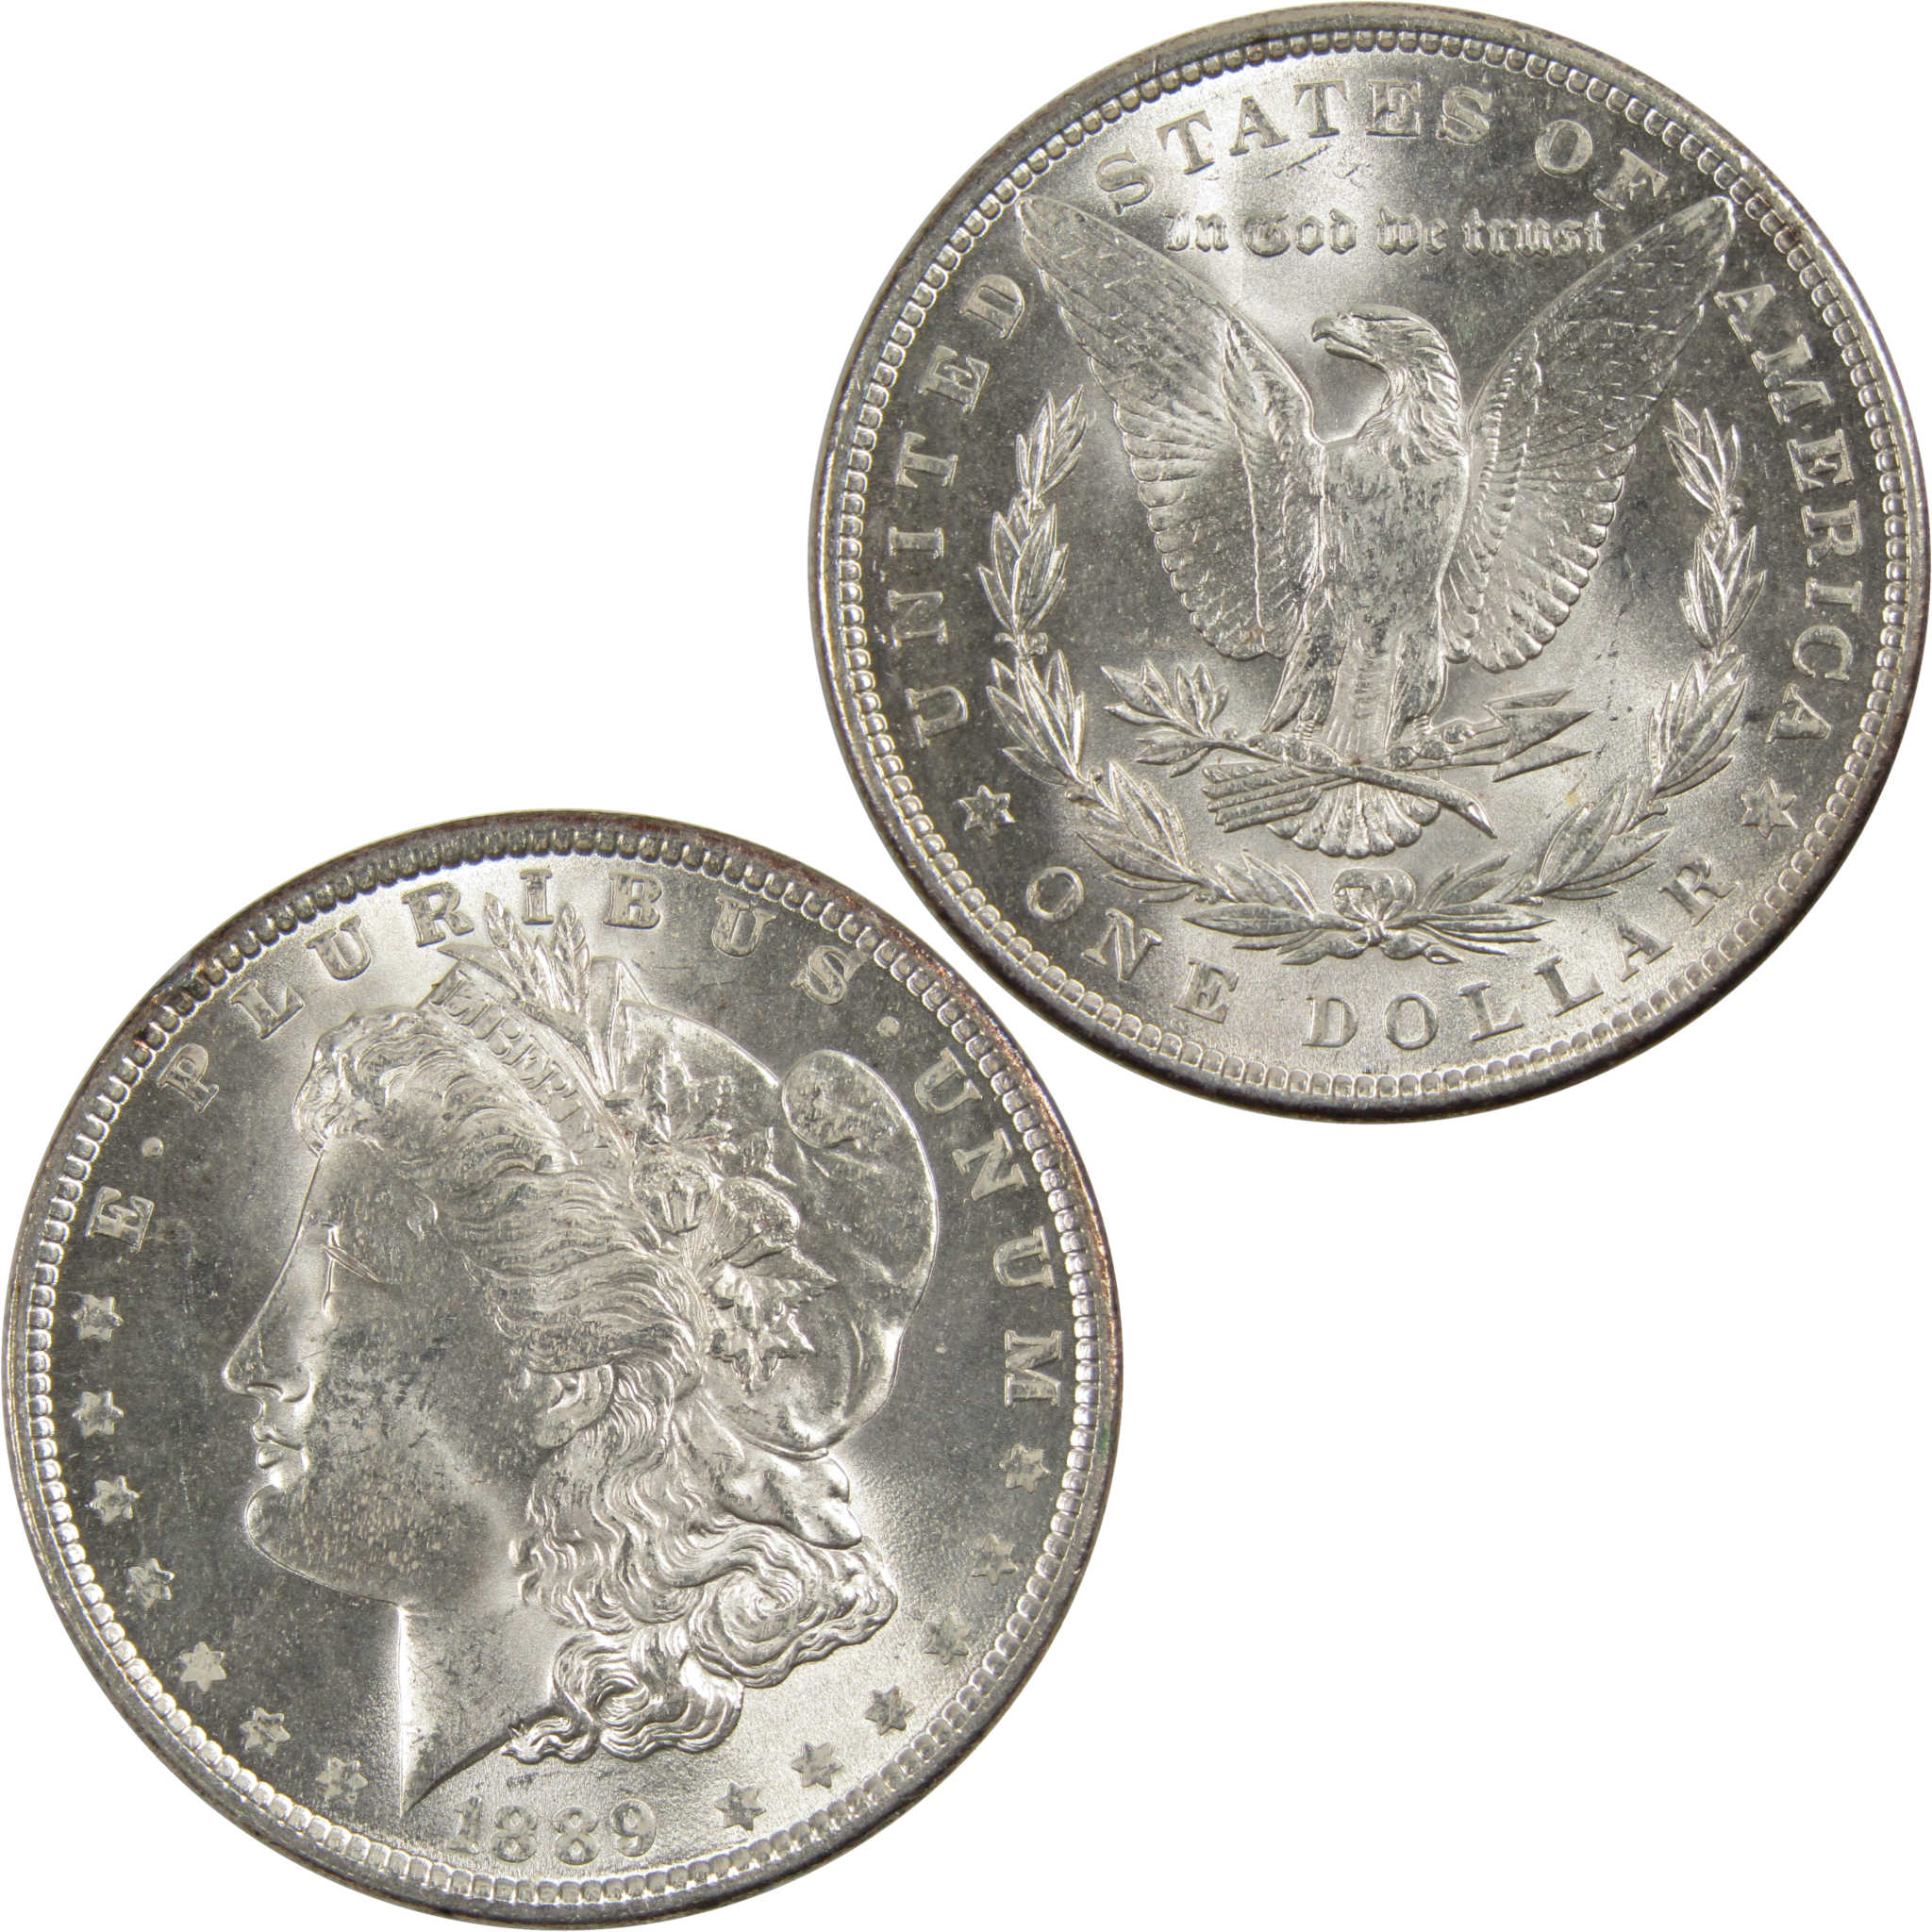 1889 Morgan Dollar BU Choice Uncirculated 90% Silver $1 Coin SKU:I8120 - Morgan coin - Morgan silver dollar - Morgan silver dollar for sale - Profile Coins &amp; Collectibles